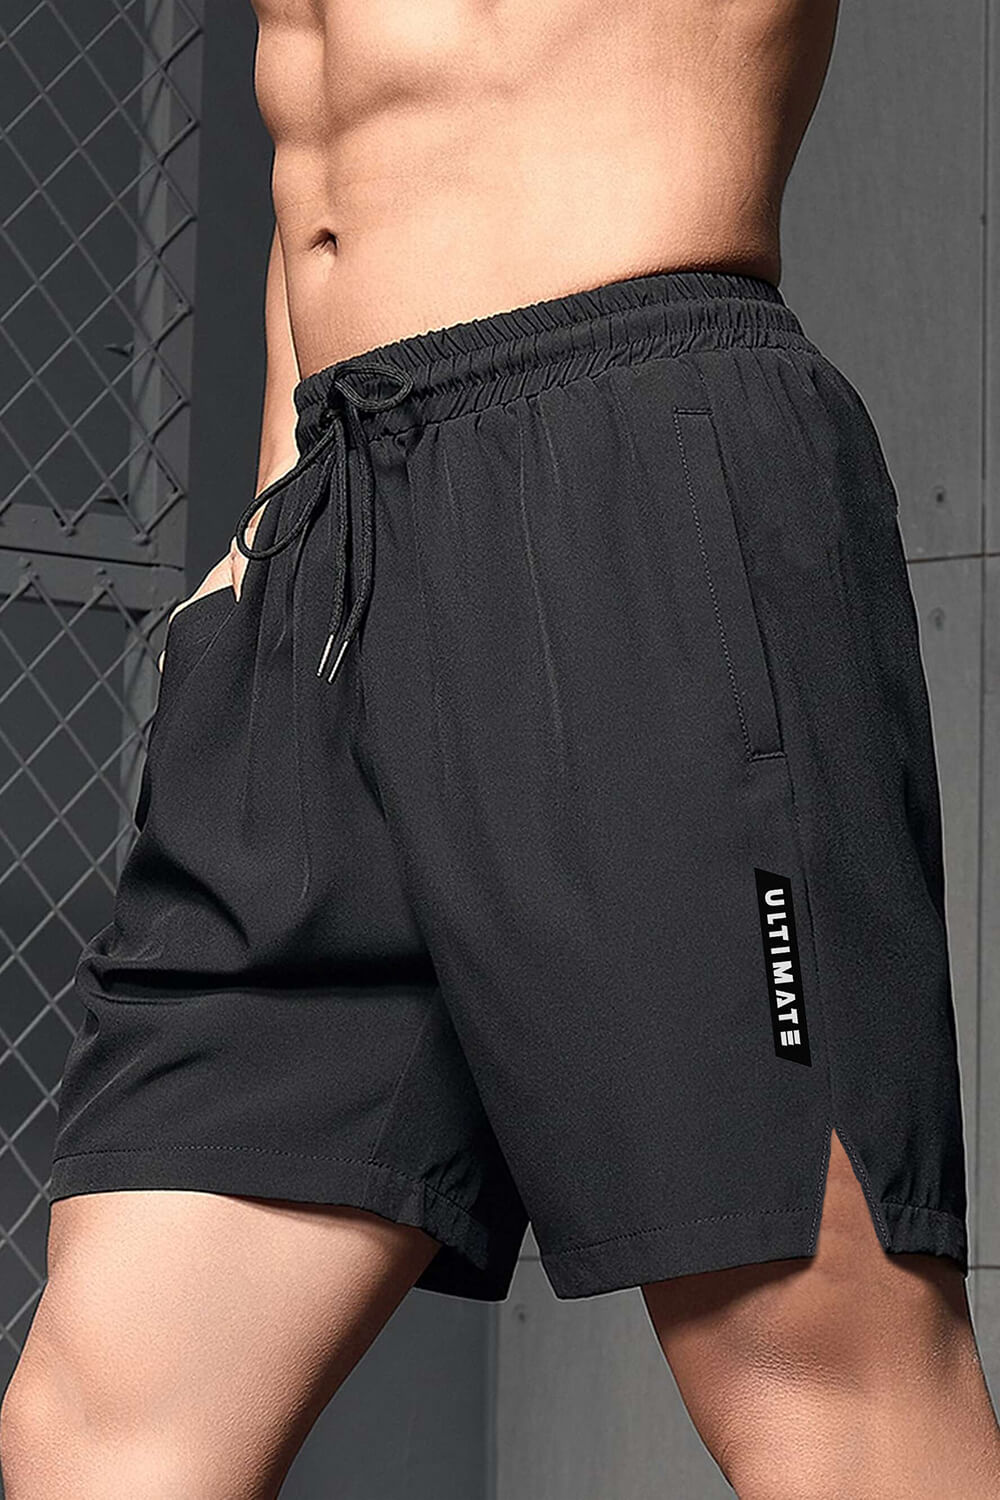 Ultimate Printed Shorts